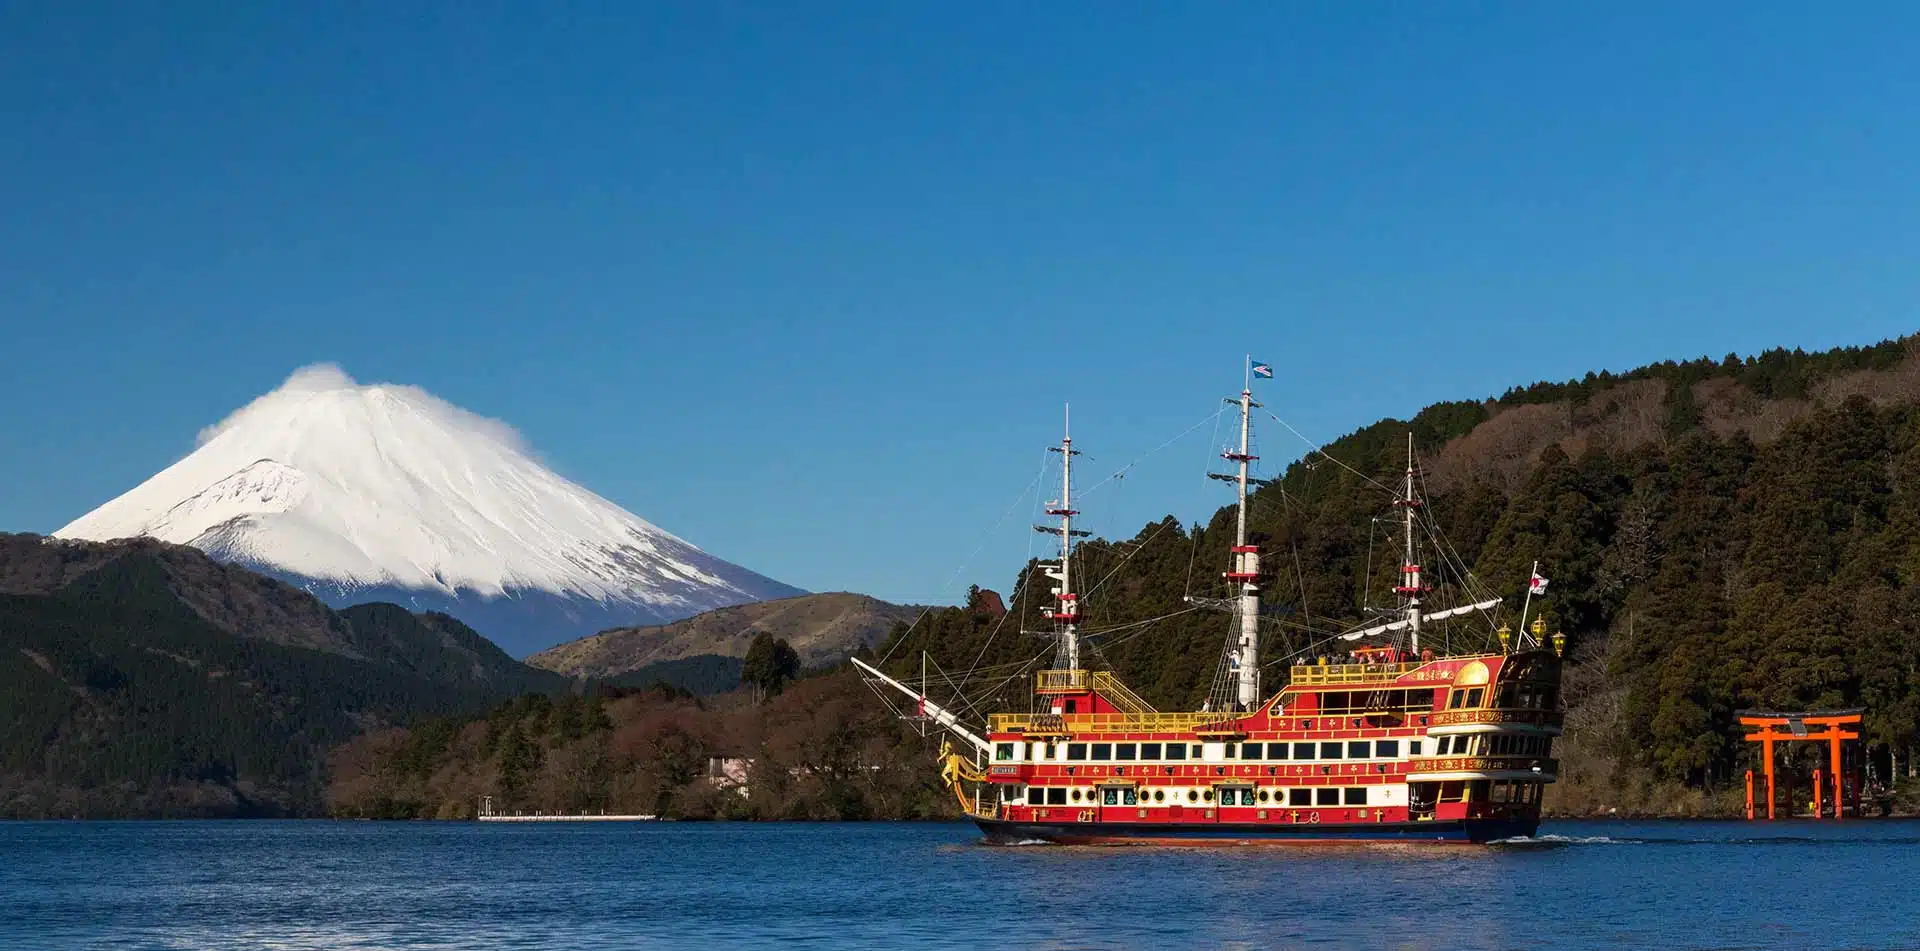 Pirate Ship in front of Mount Fuji, Japan